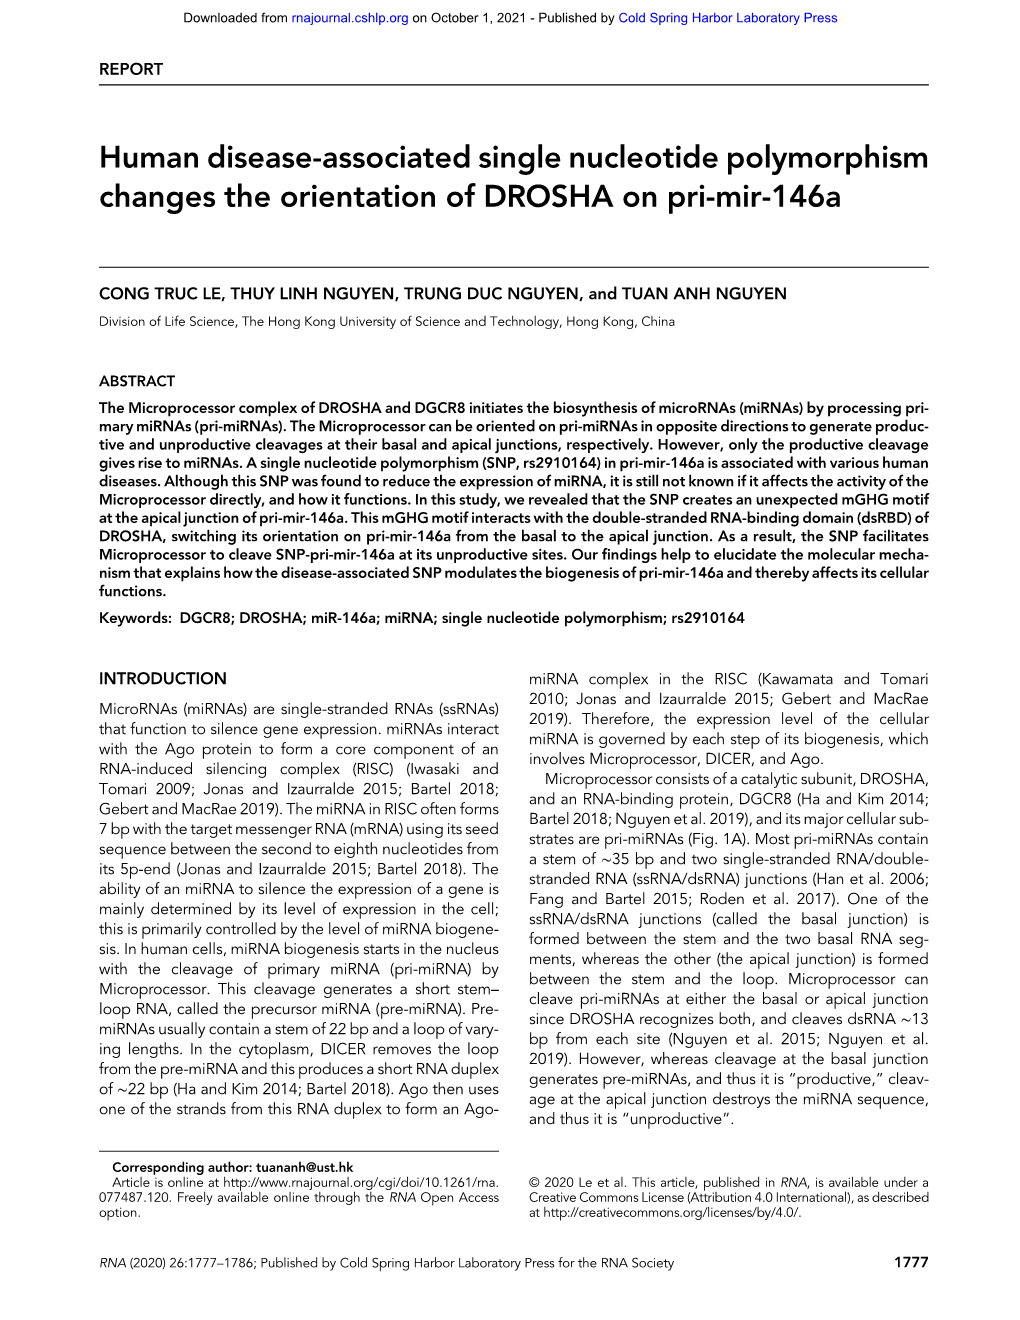 Human Disease-Associated Single Nucleotide Polymorphism Changes the Orientation of DROSHA on Pri-Mir-146A